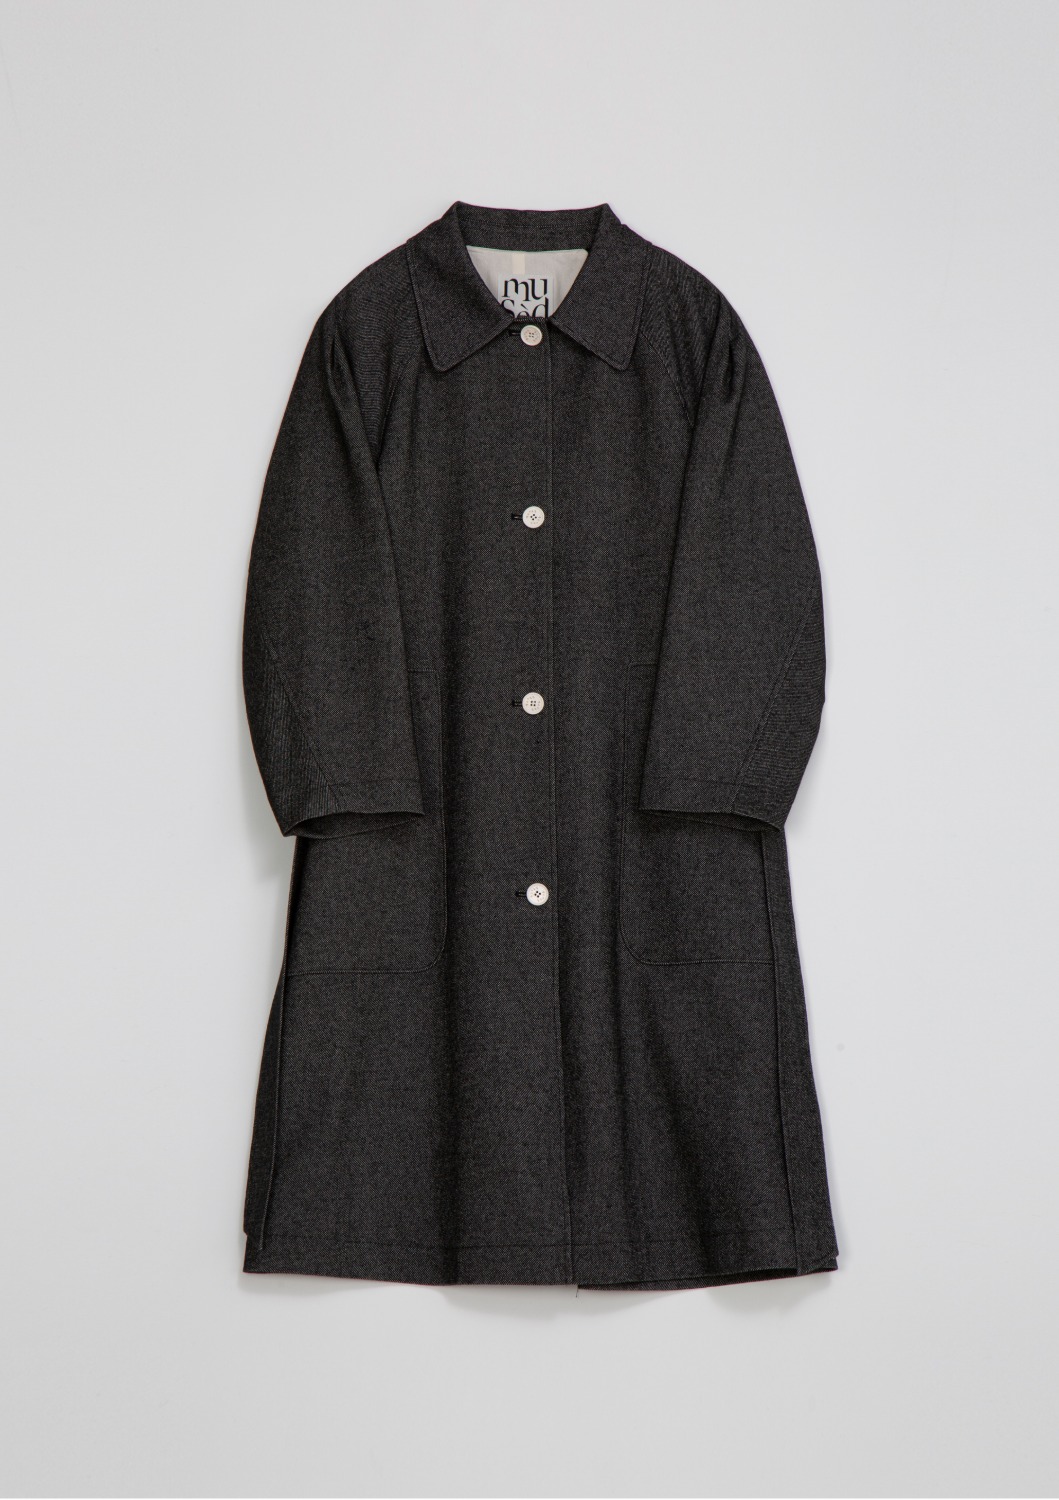 Bon Trench Coat - Black Twill Wool-cotton Blended Italian Fabric